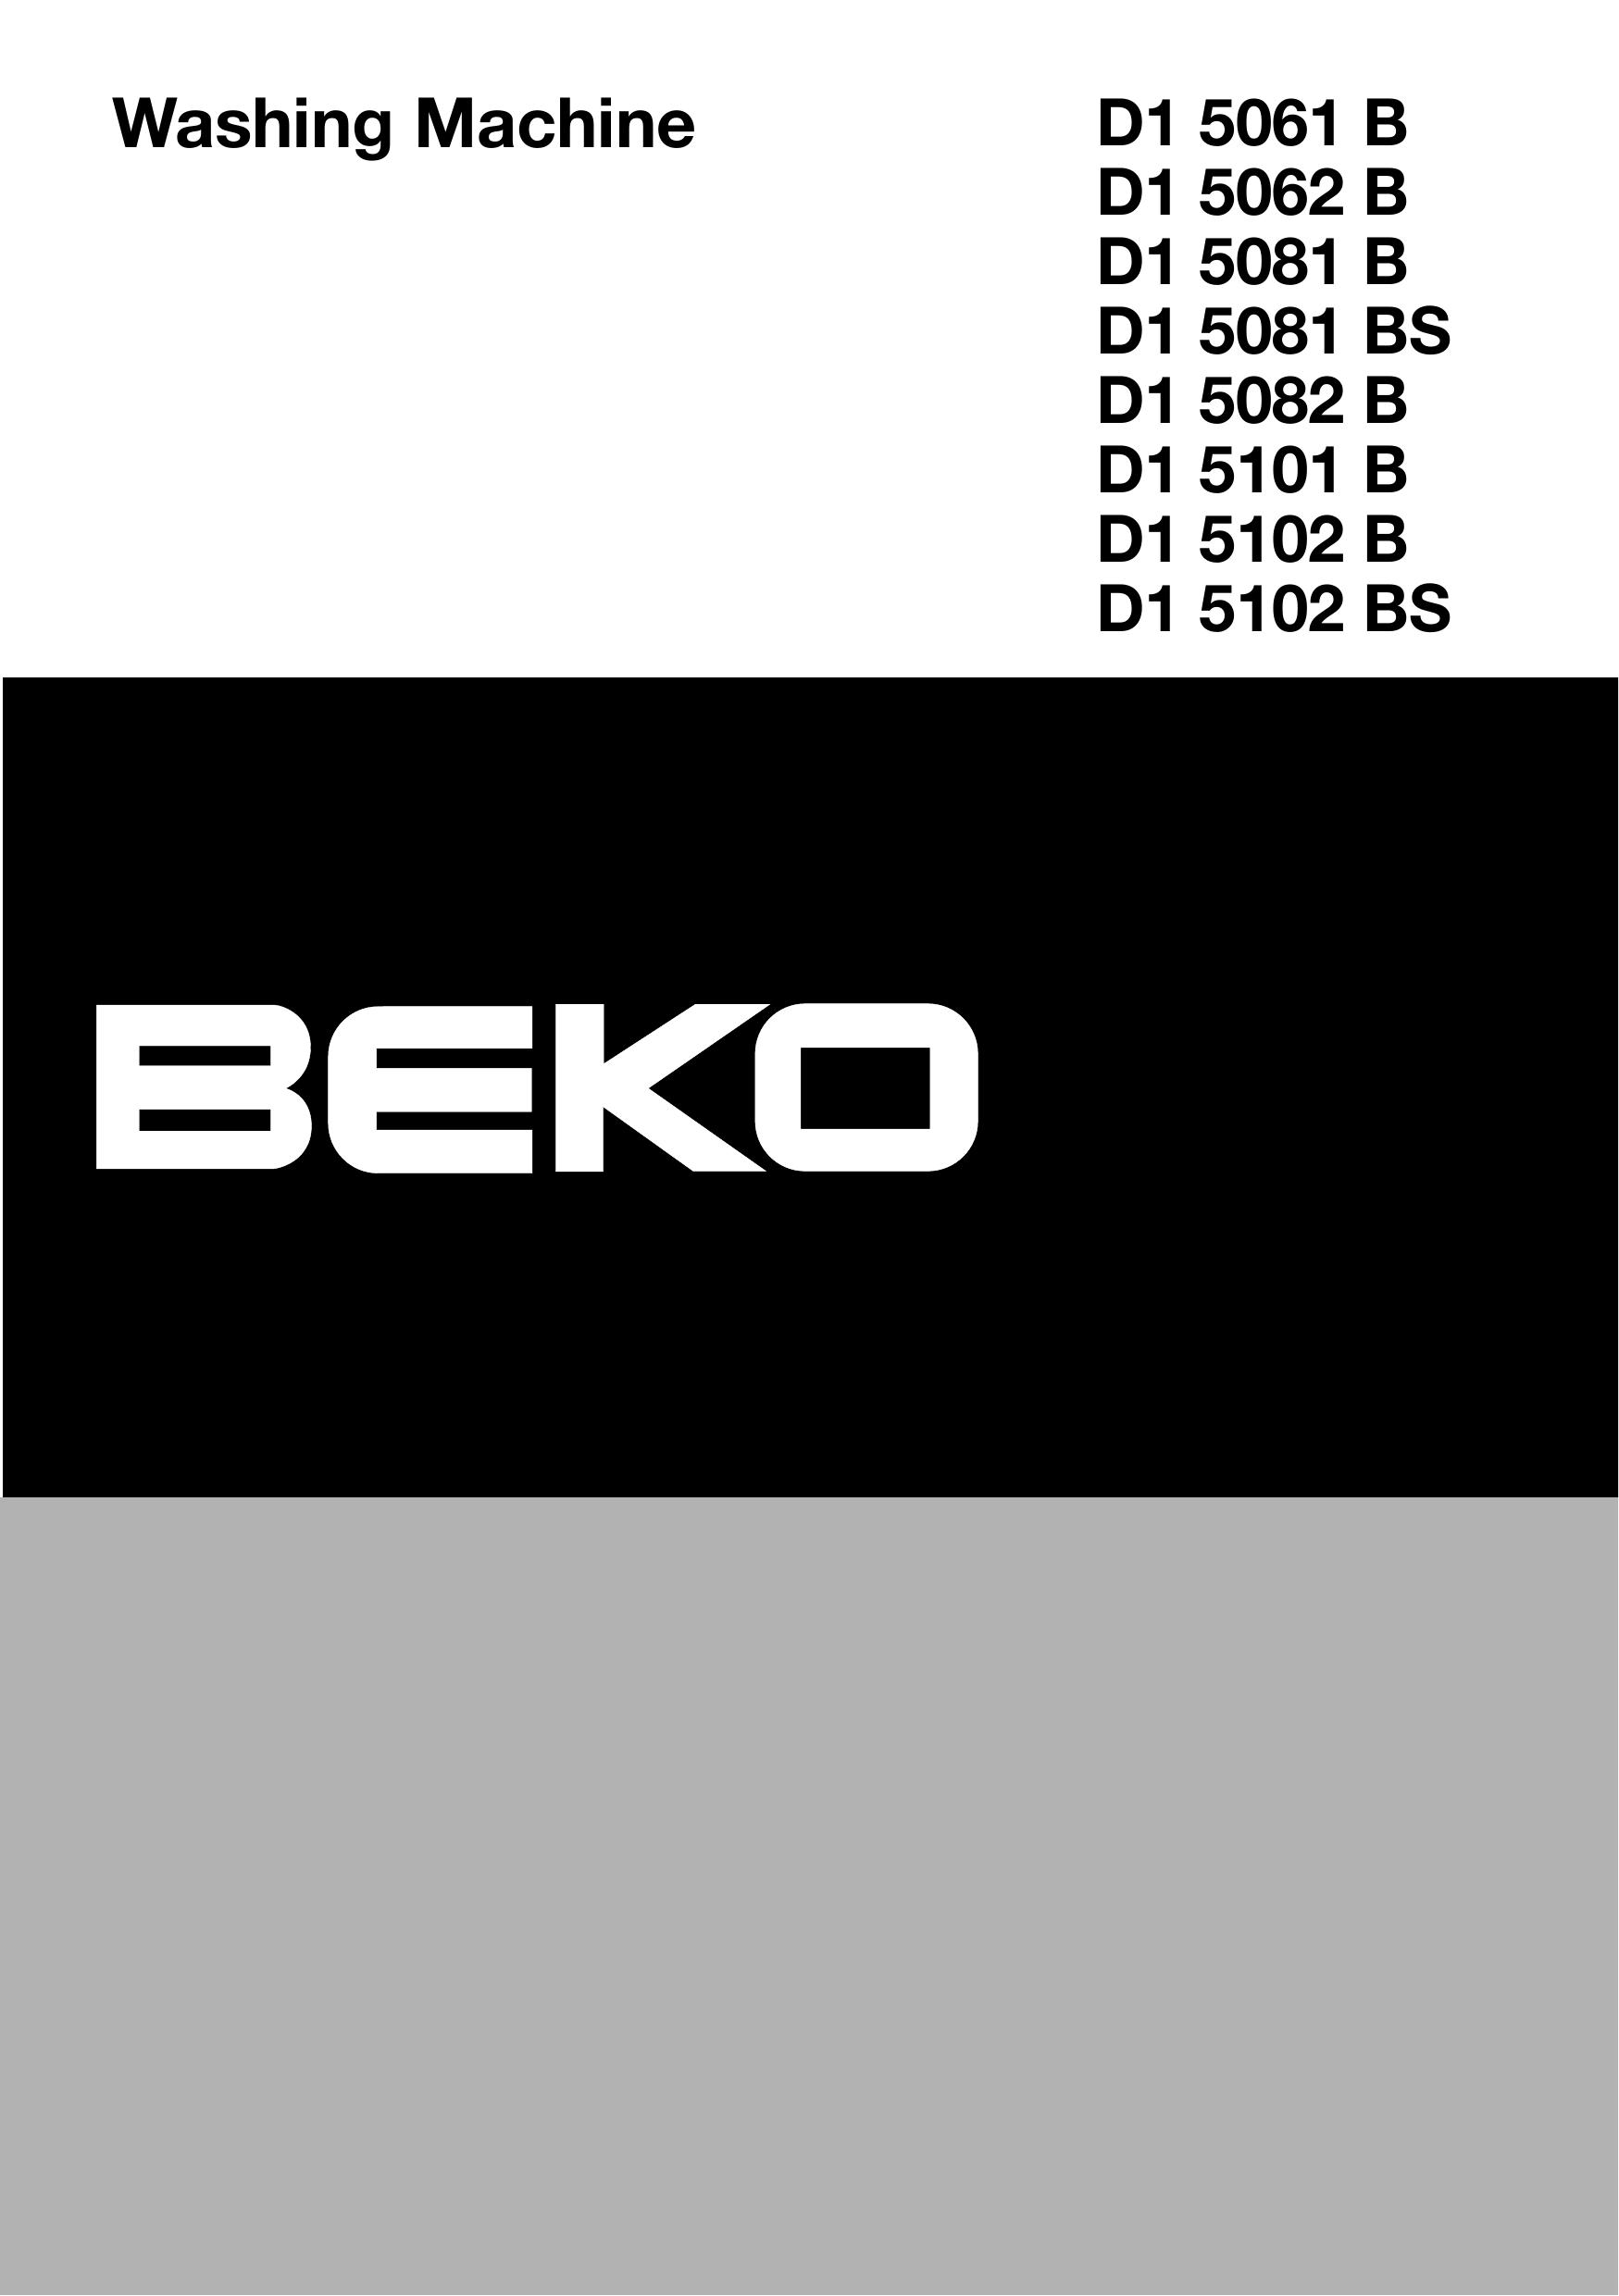 Beko D1 5081 BS Washer User Manual